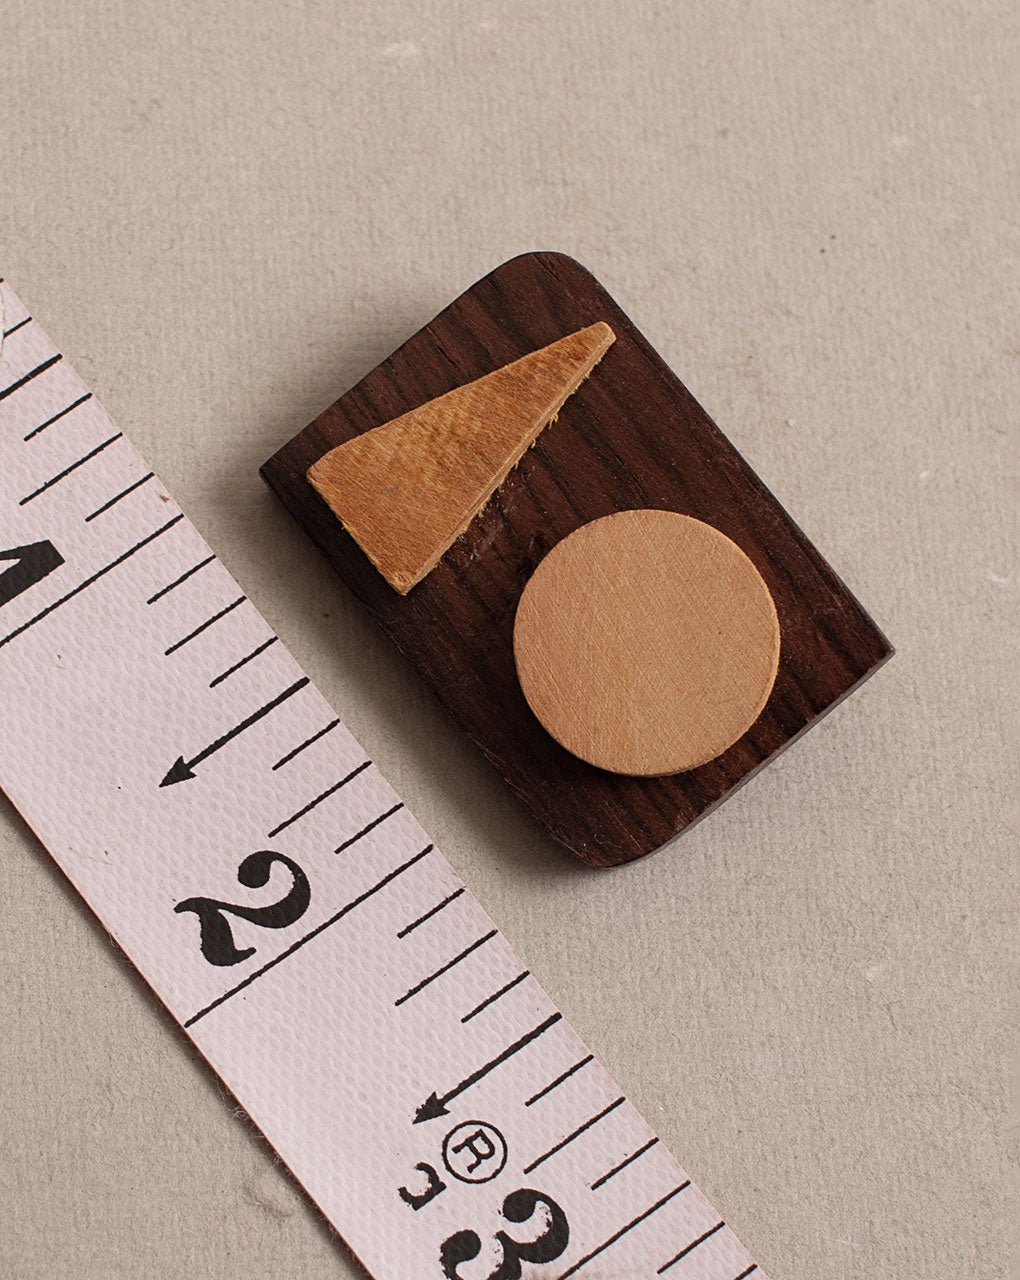 Wooden Button ( Single Piece ) - Fabriclore.com